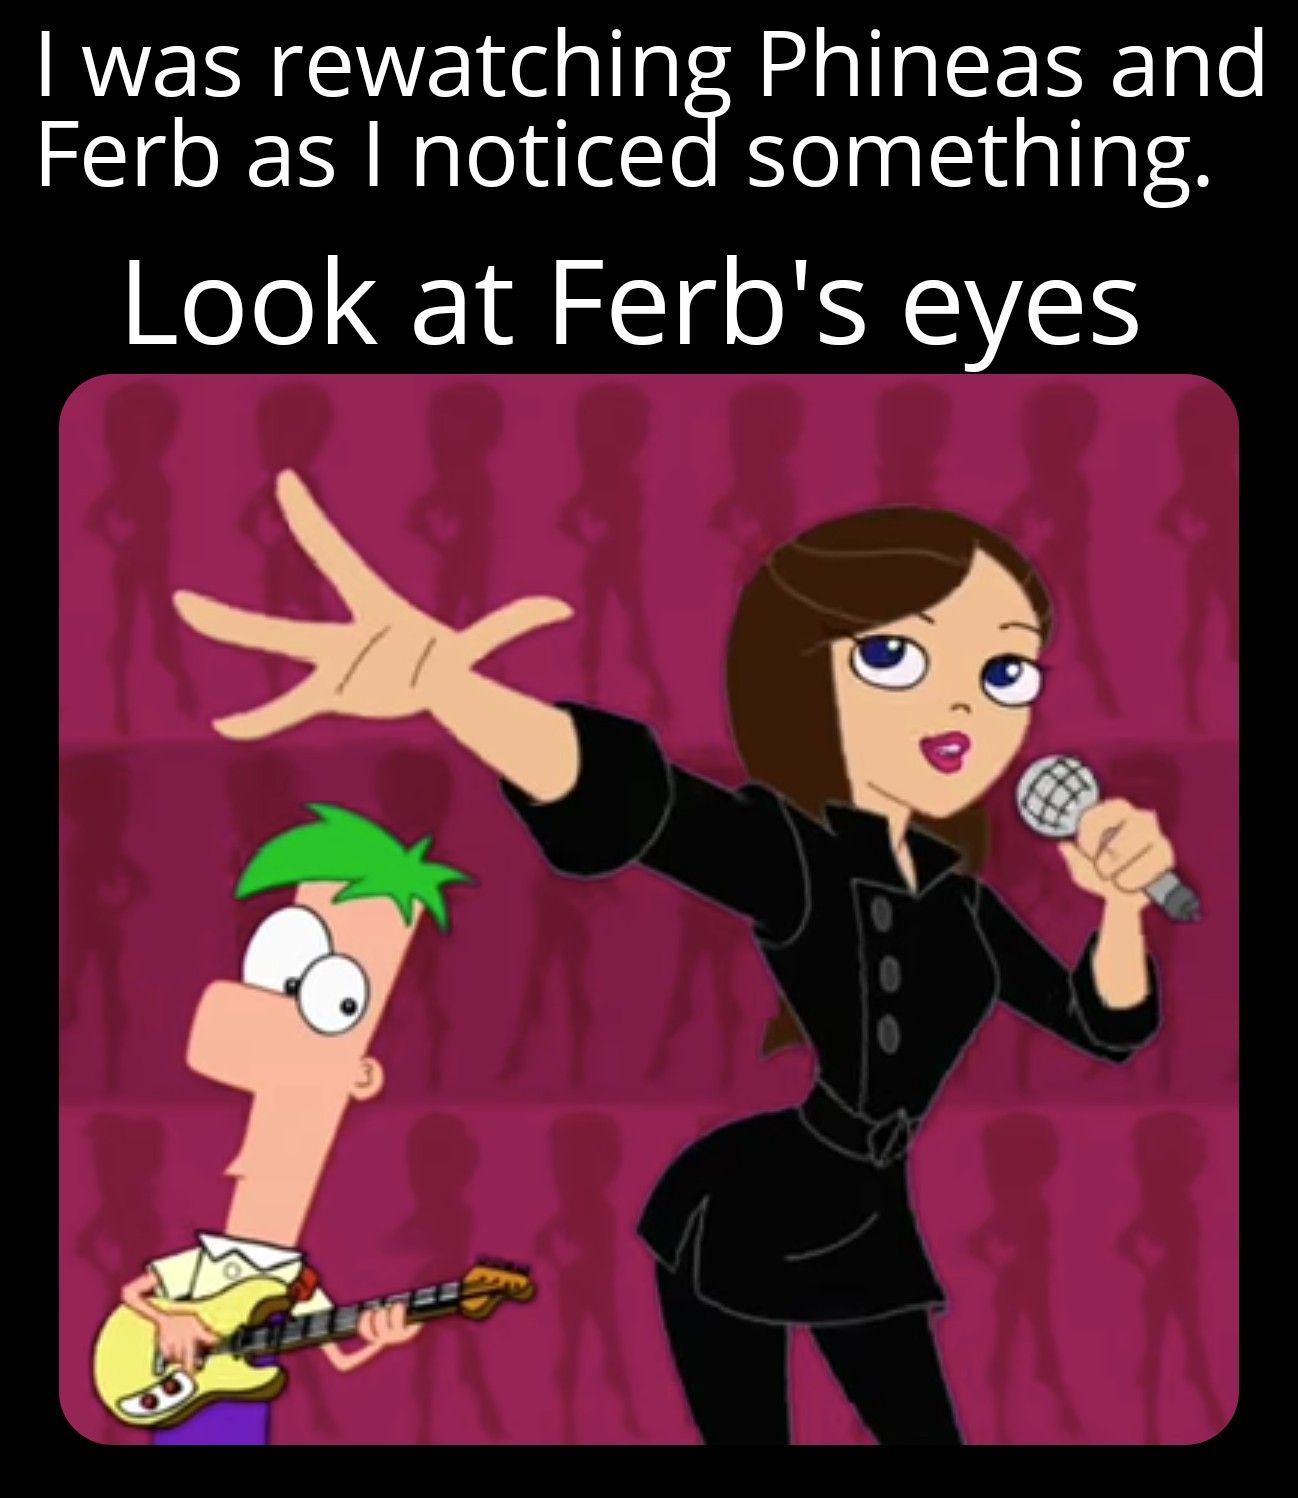 Ferb is definitely looking somewhere